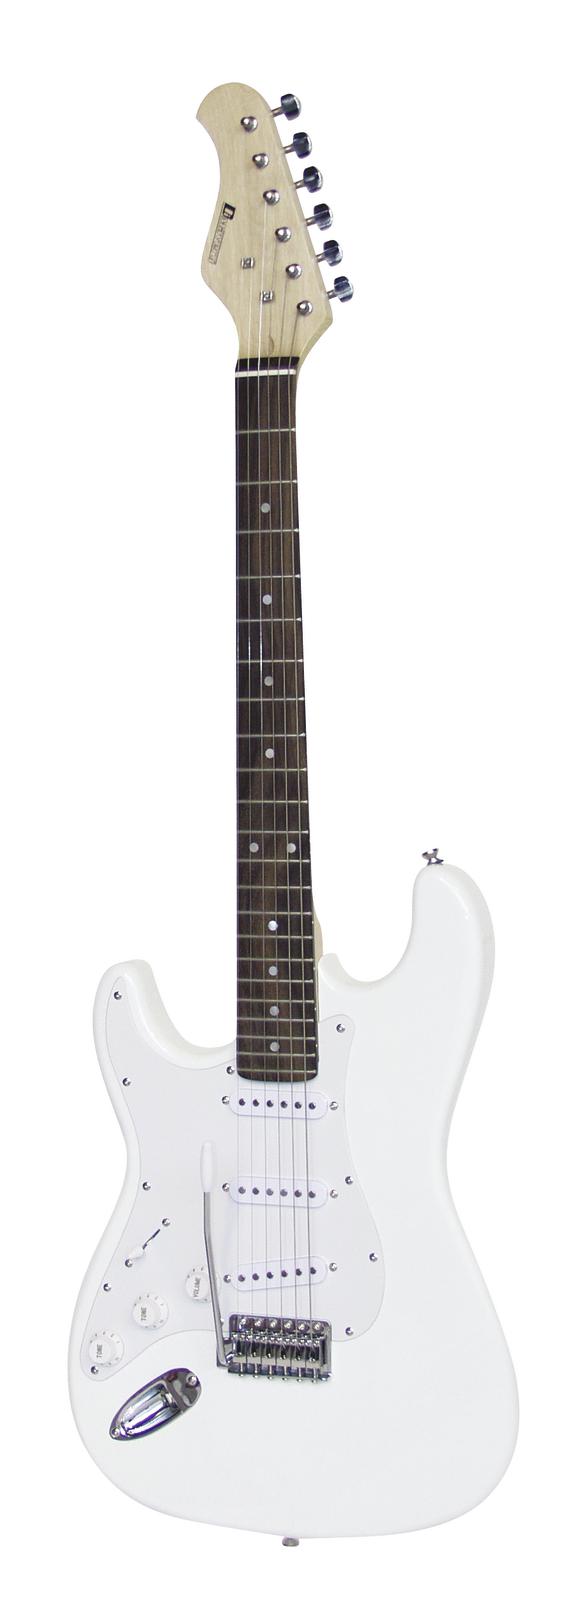 koolstof broeden Lelie DIMAVERY ST-203 E-Guitar LH, white > Muziek maken